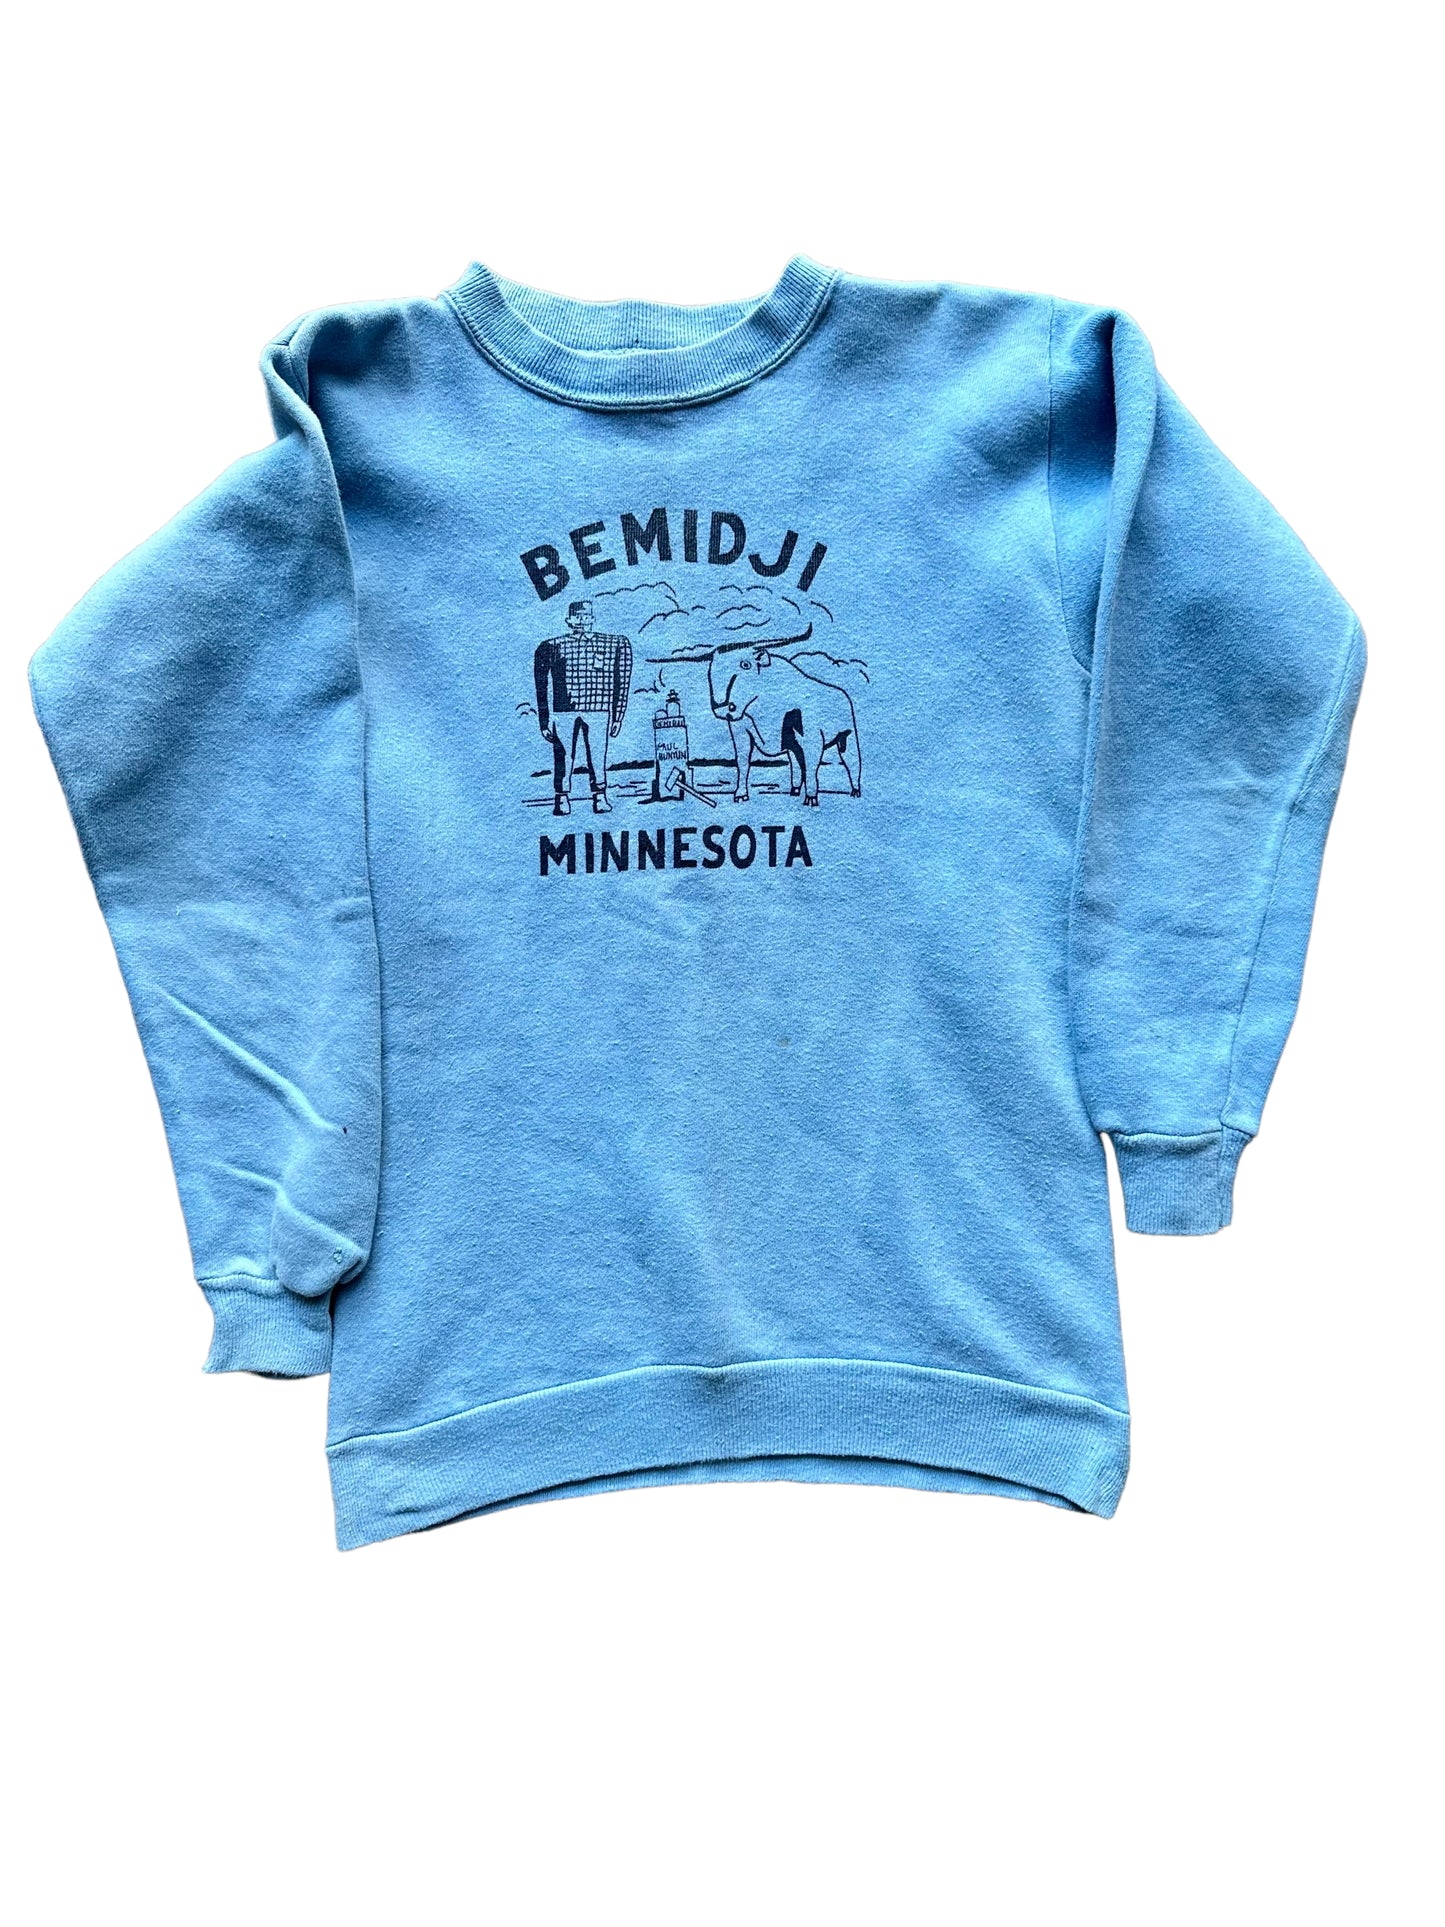 Front View of Vintage Bemidji Crewneck Sweatshirt |  Seattle Vintage Workwear